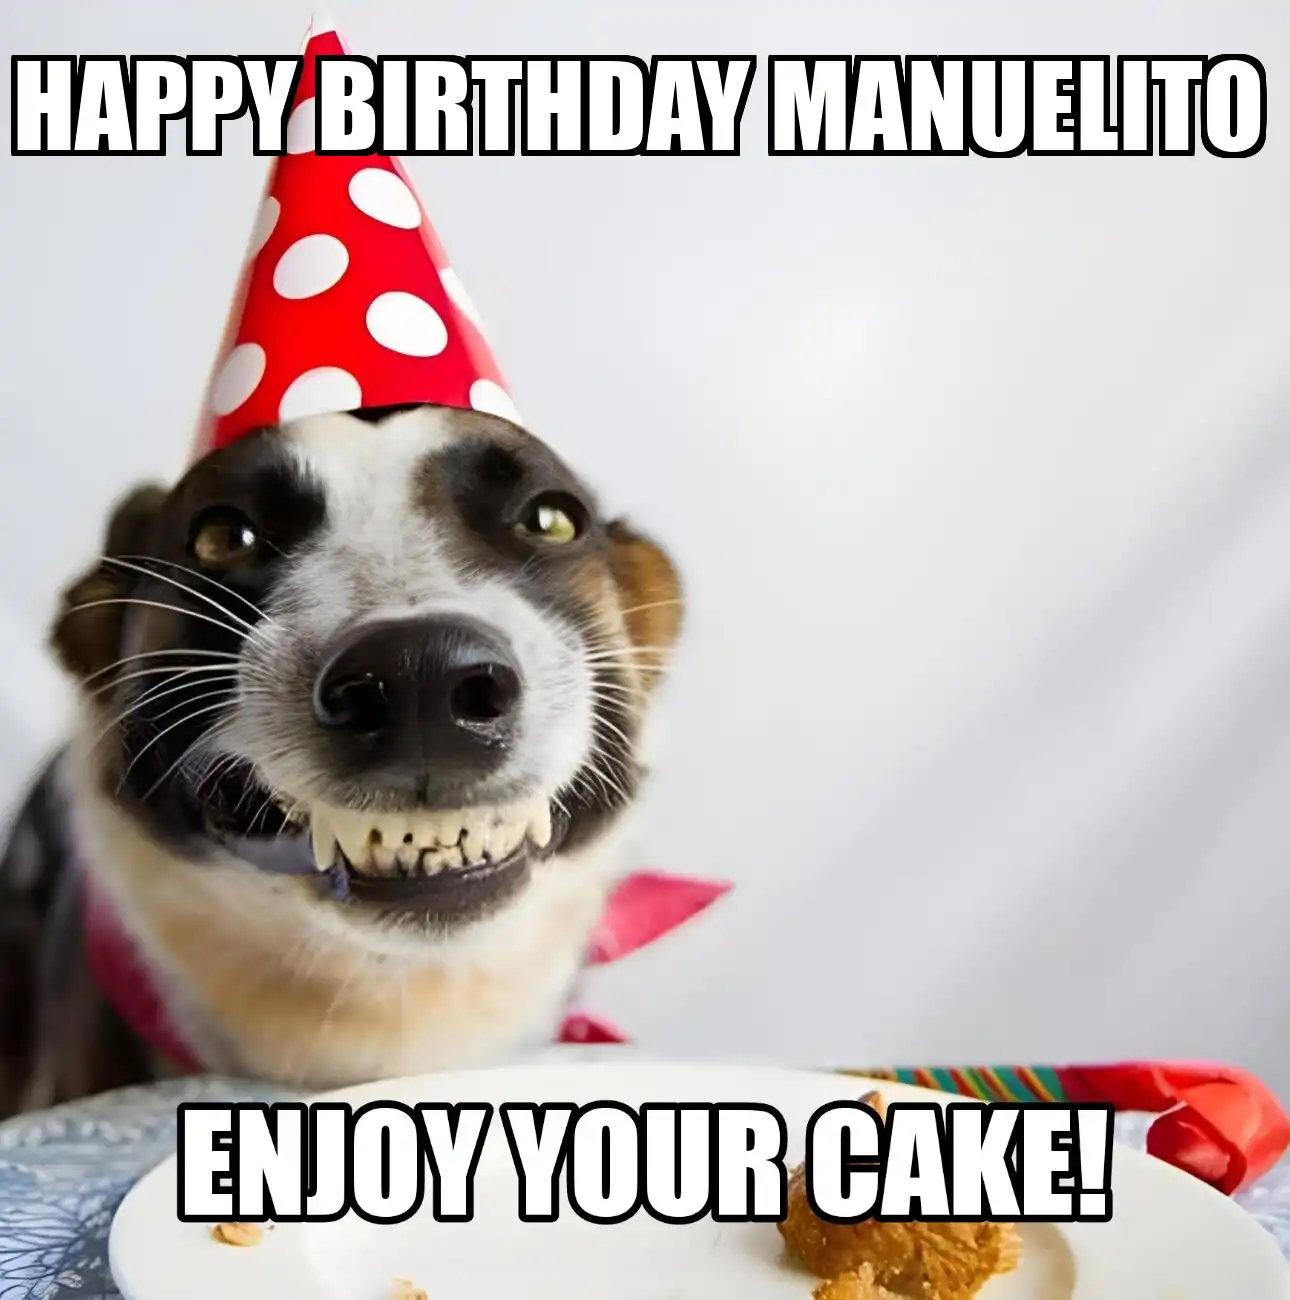 Happy Birthday Manuelito Enjoy Your Cake Dog Meme